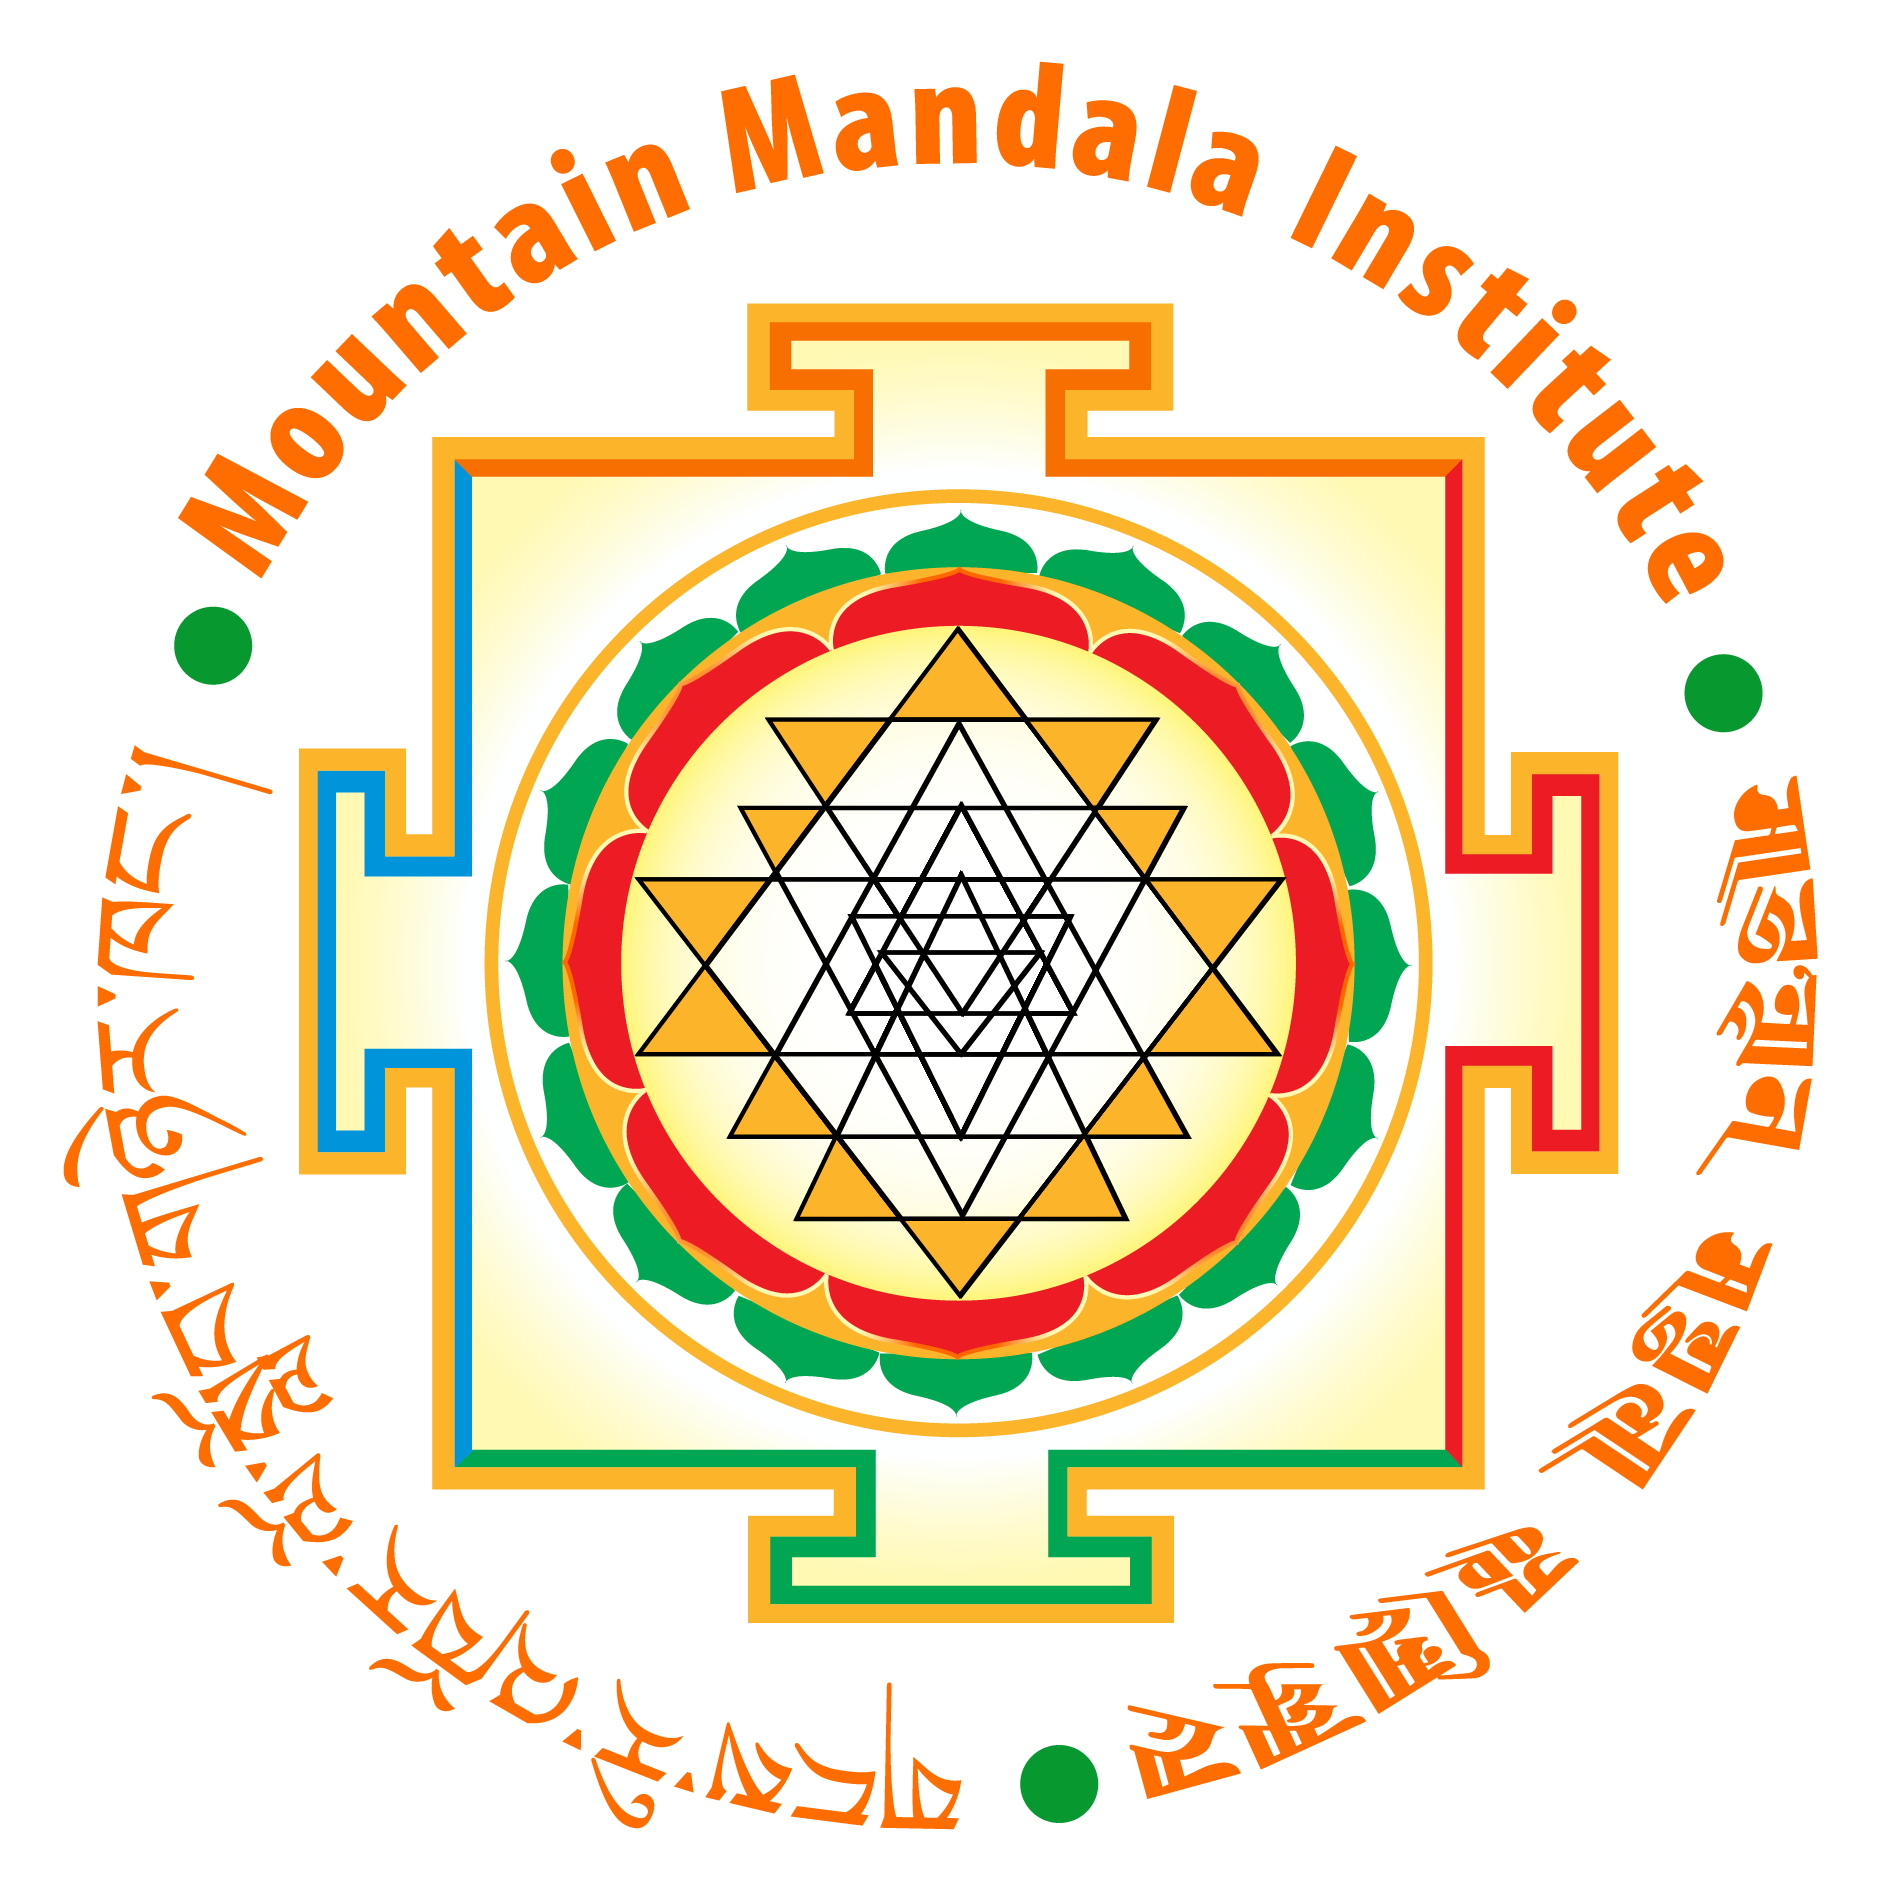 Mountain Mandala Institute